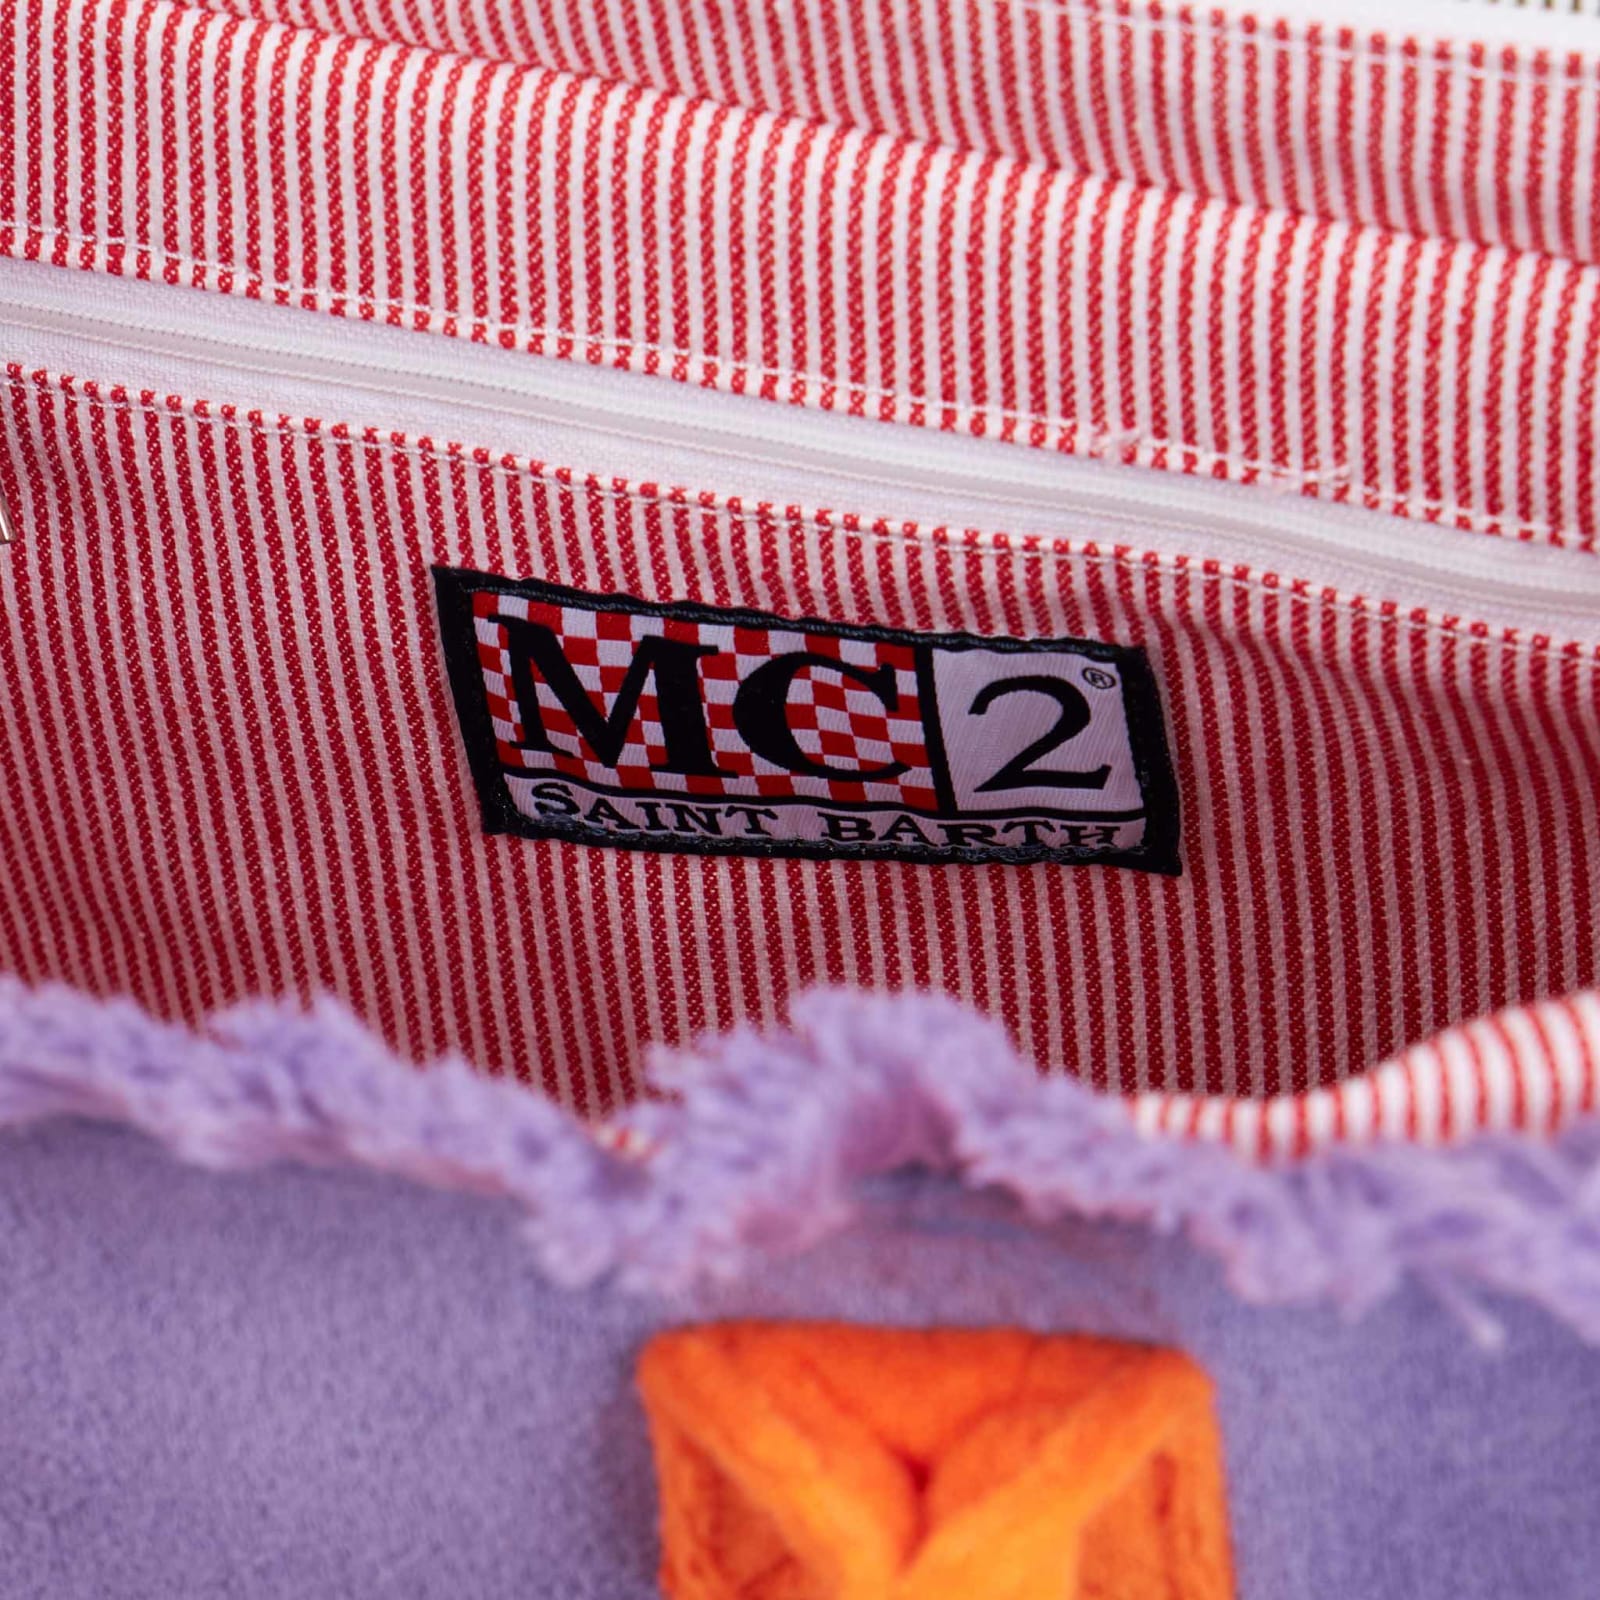 MC2 Saint Barth Colette Terry-Cloth Tote Bag - Purple for Women